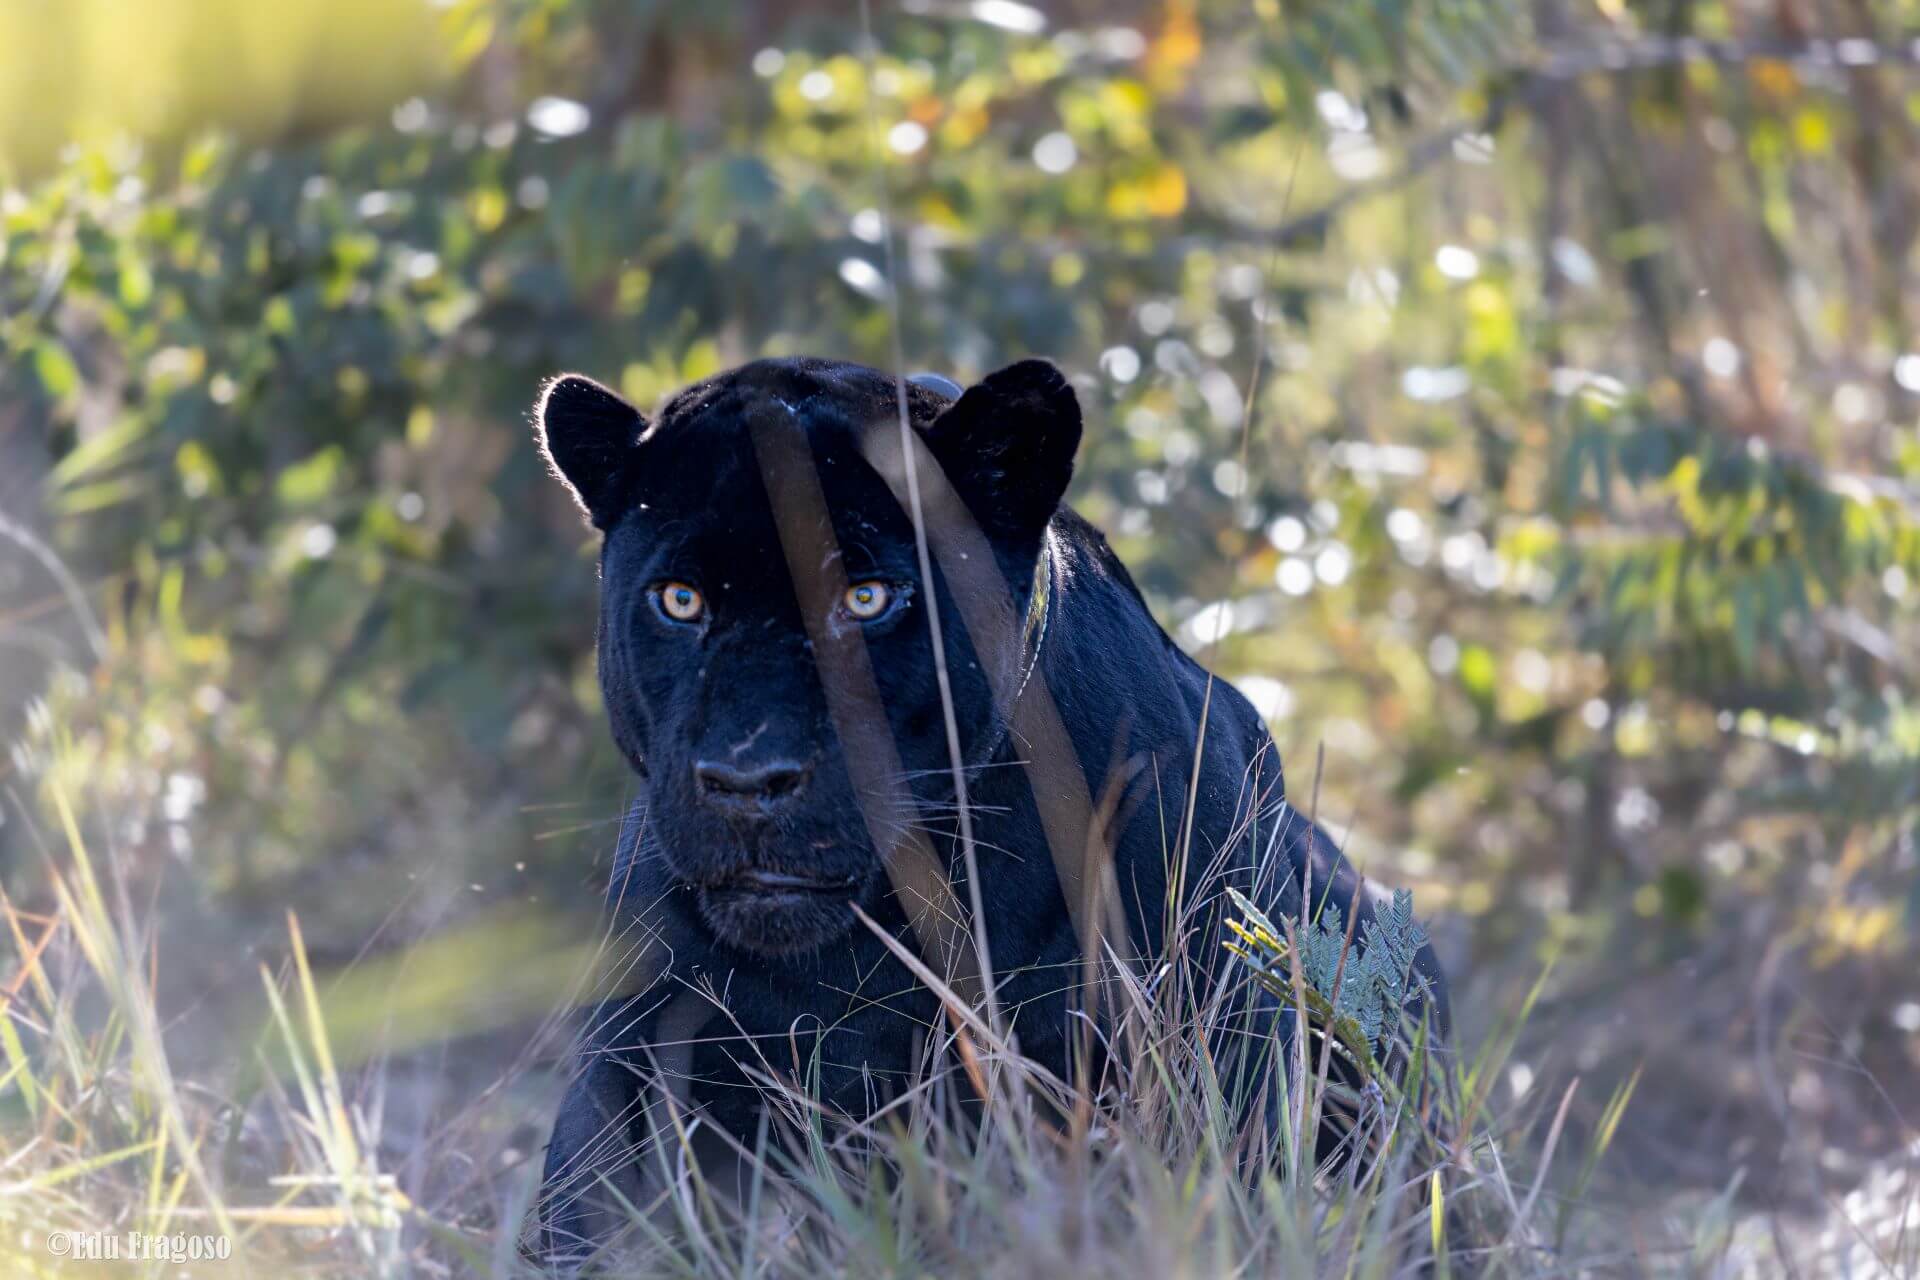 Black jaguar, a symbol of resistance in the fight for the conservation of the Cerrado